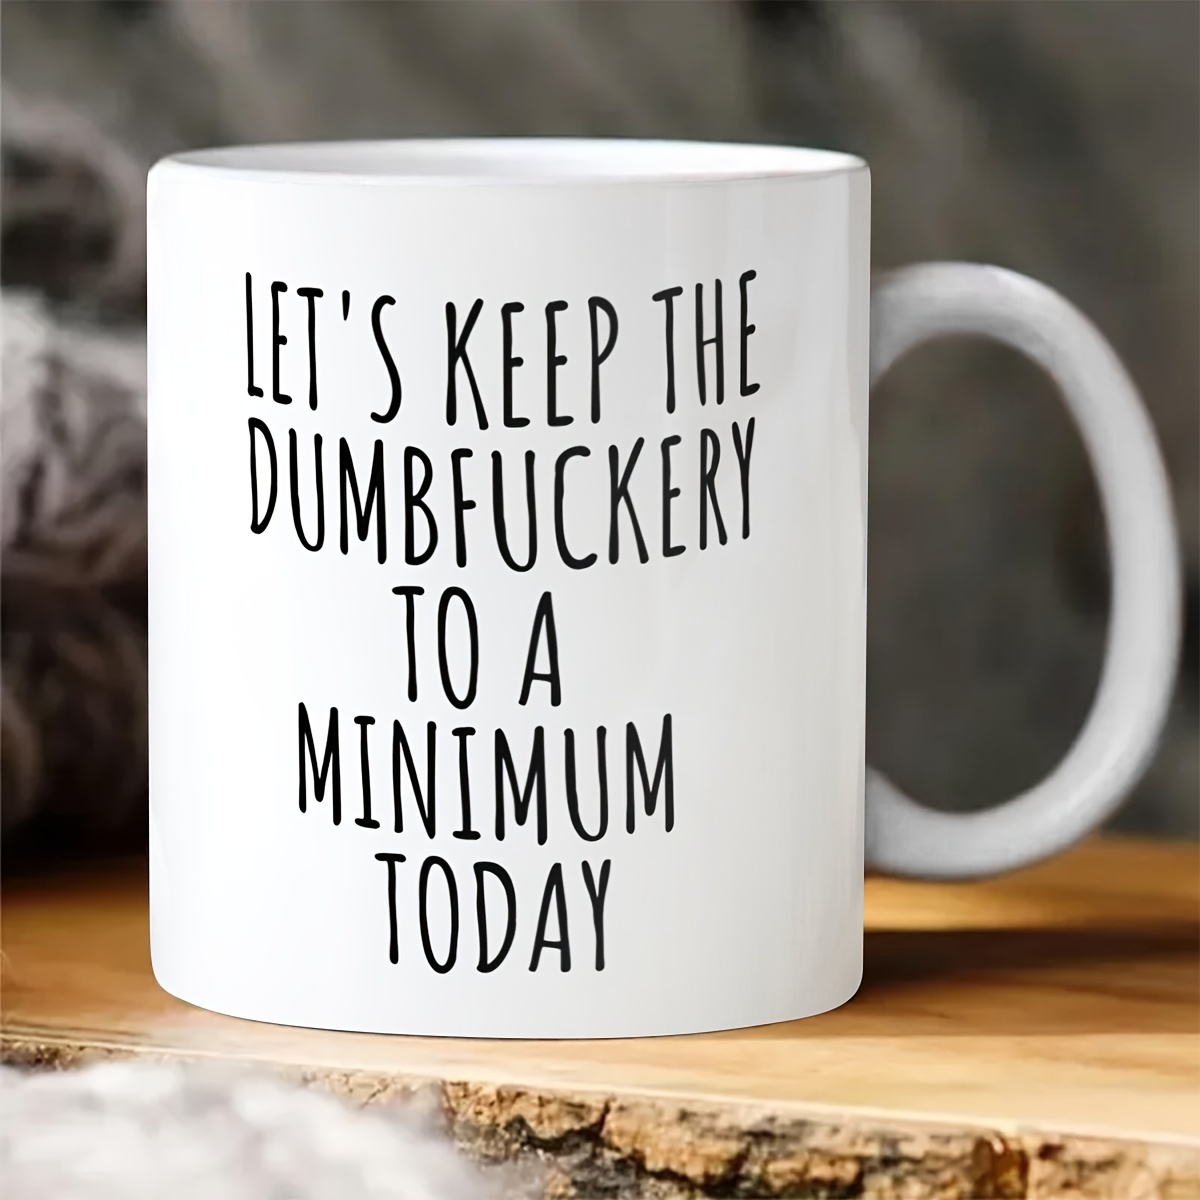 Keep calm and drink coffee tea hot chocolate white black color mug funny  gift